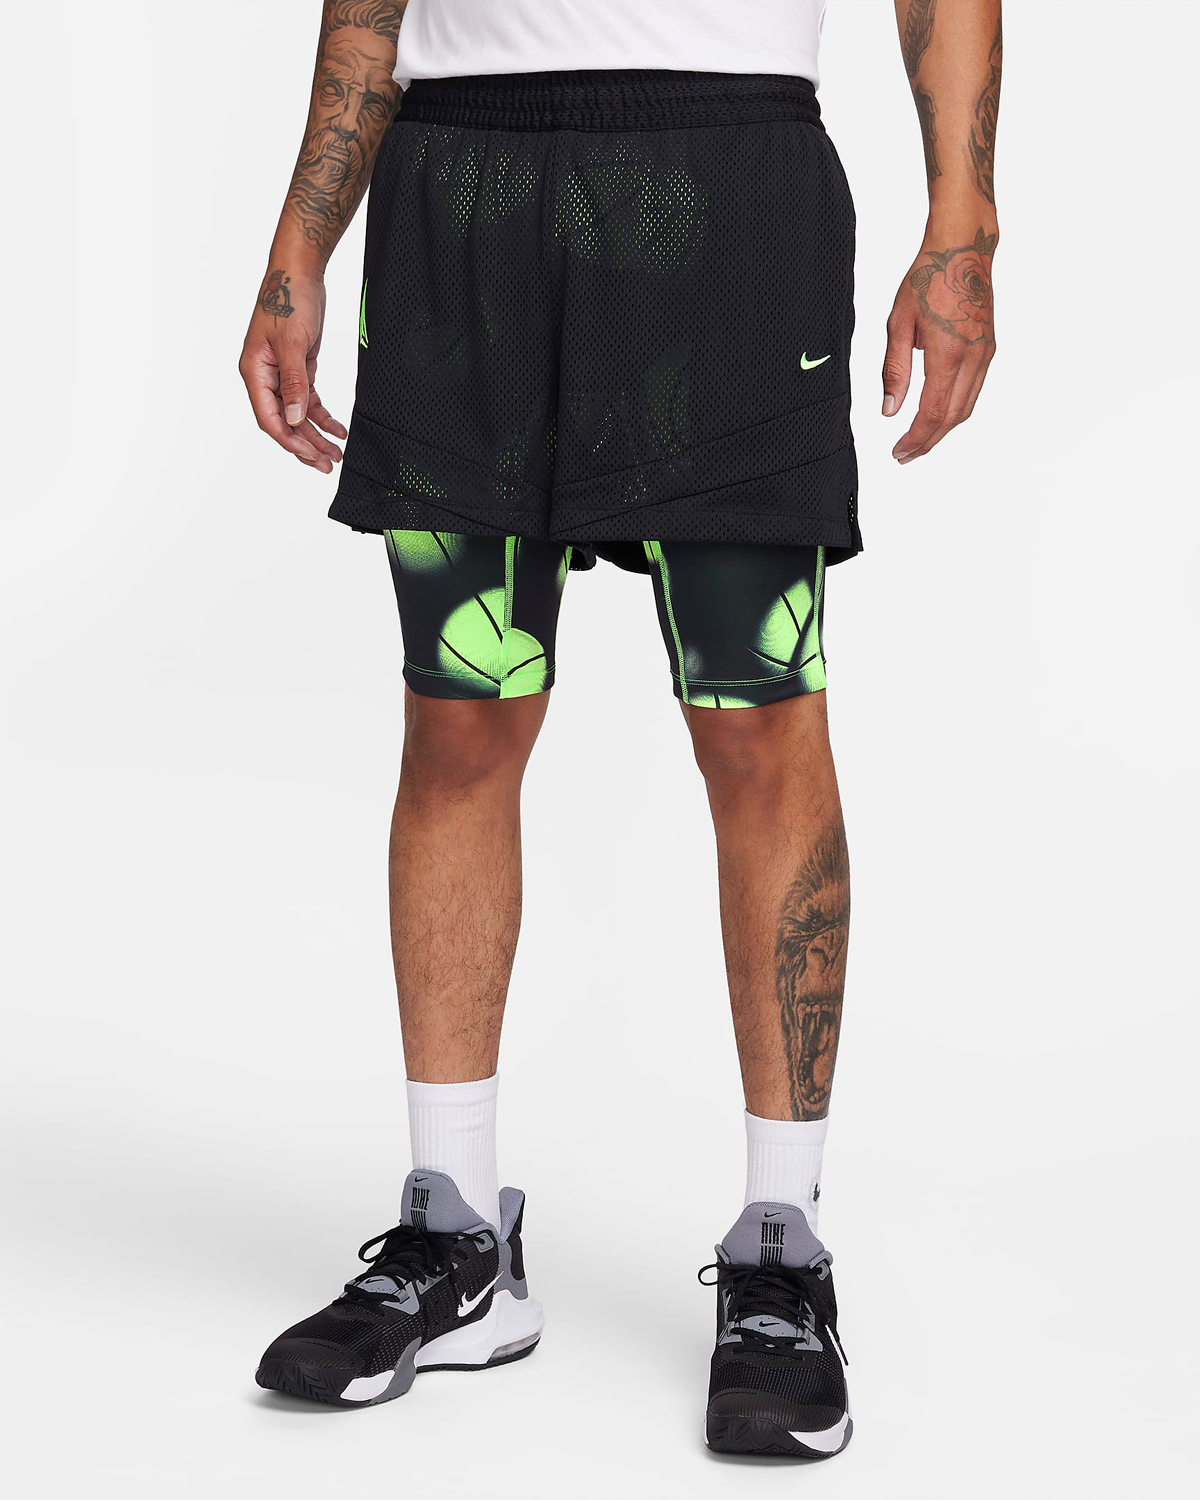 Nike-Ja-1-Zombie-Halloween-Shorts-Black-Lime-1